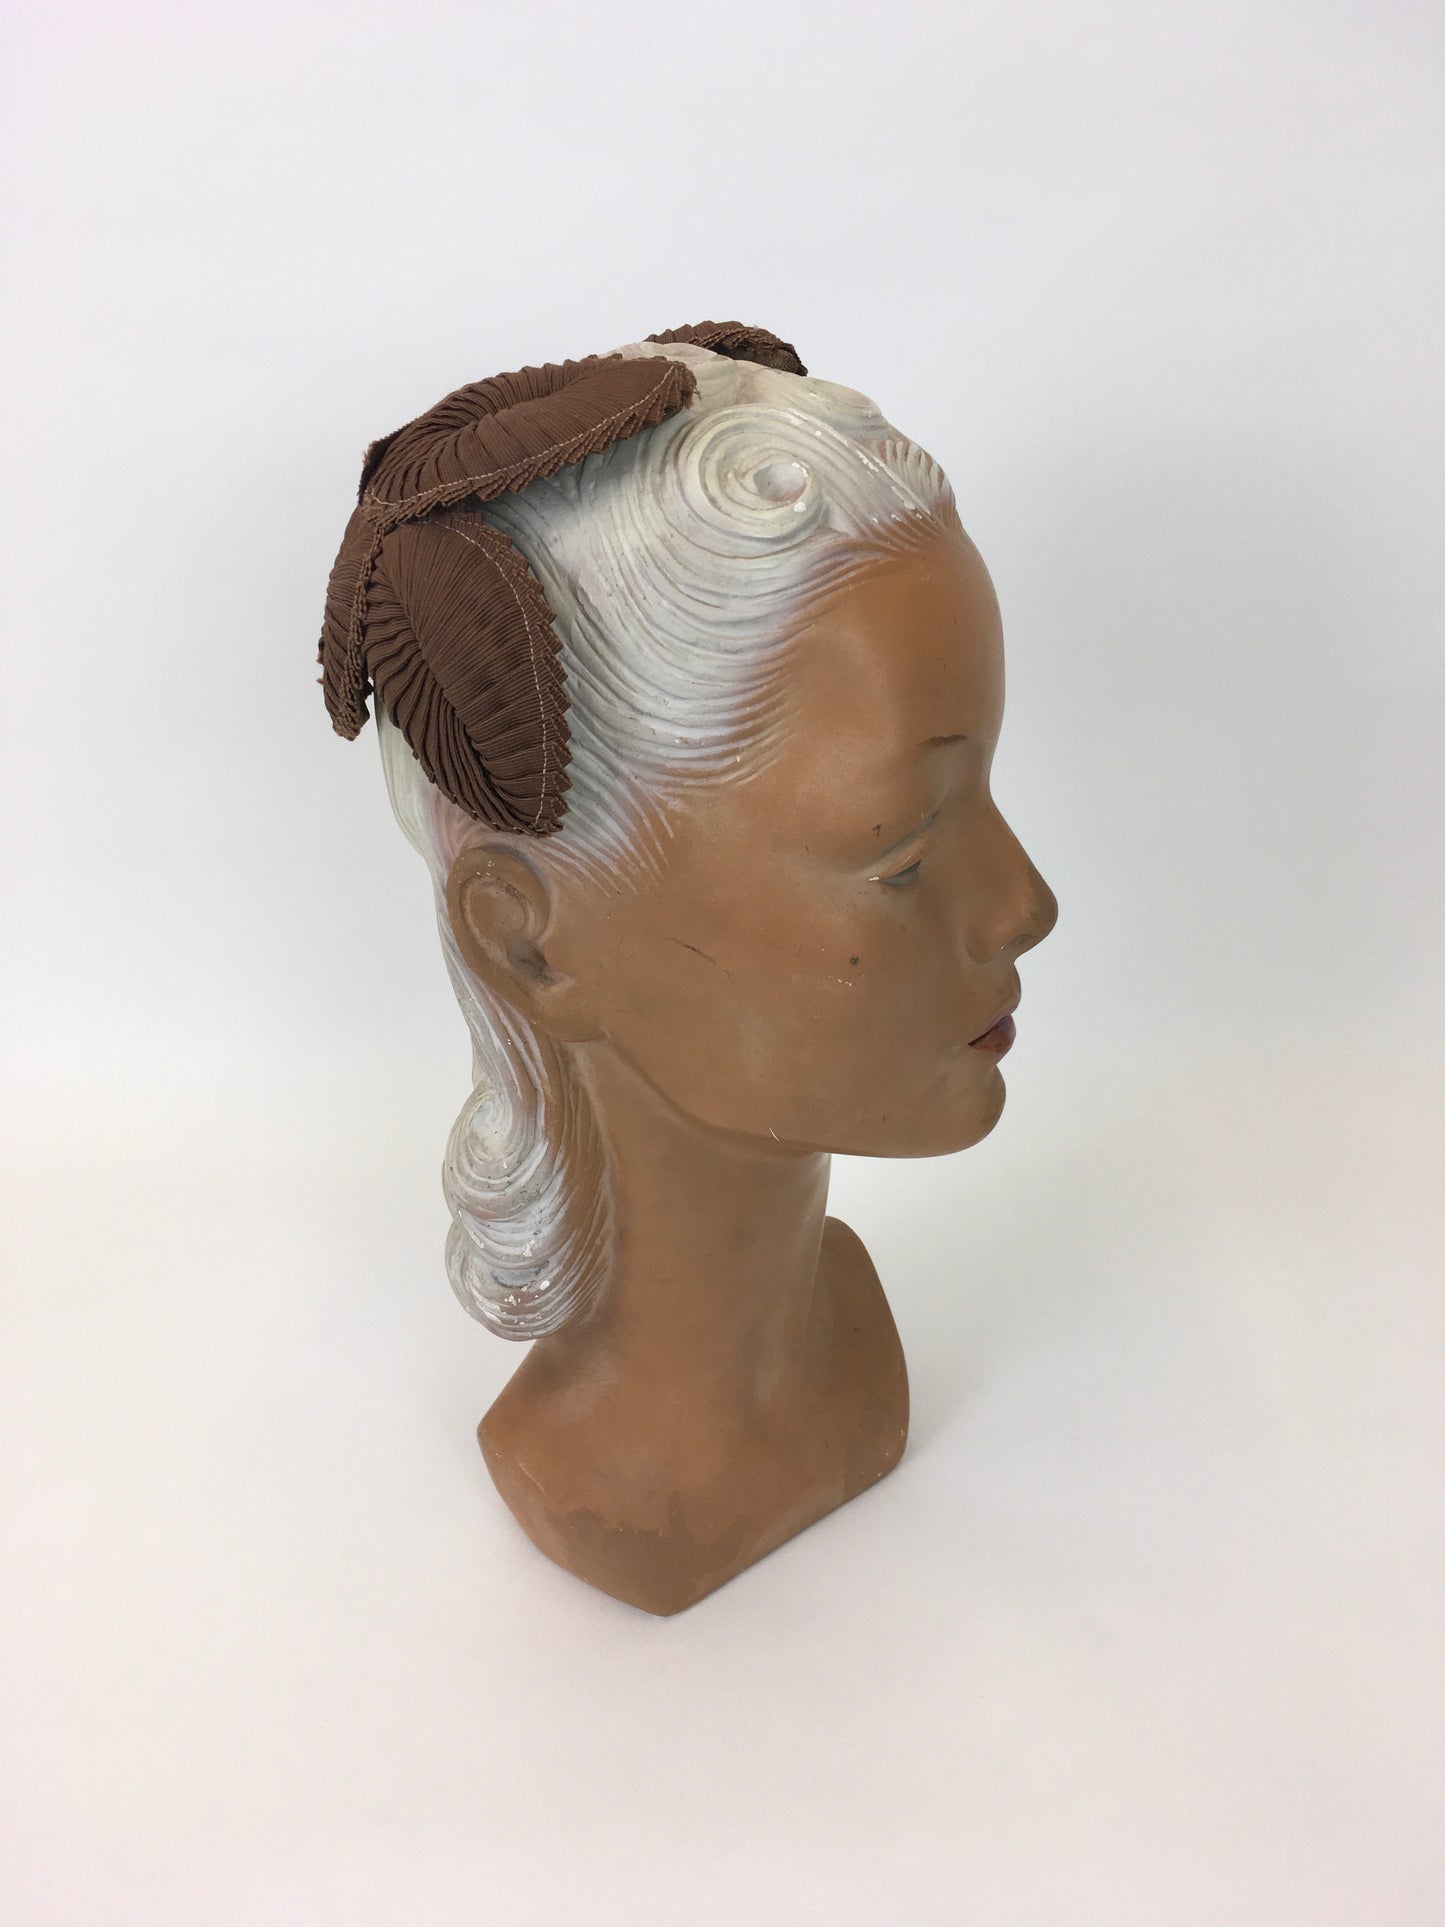 Original 1950s Darling Soft Brown Grosgrain Headpiece - Wire Construction With Hand Pleated Grosgrain Swirls